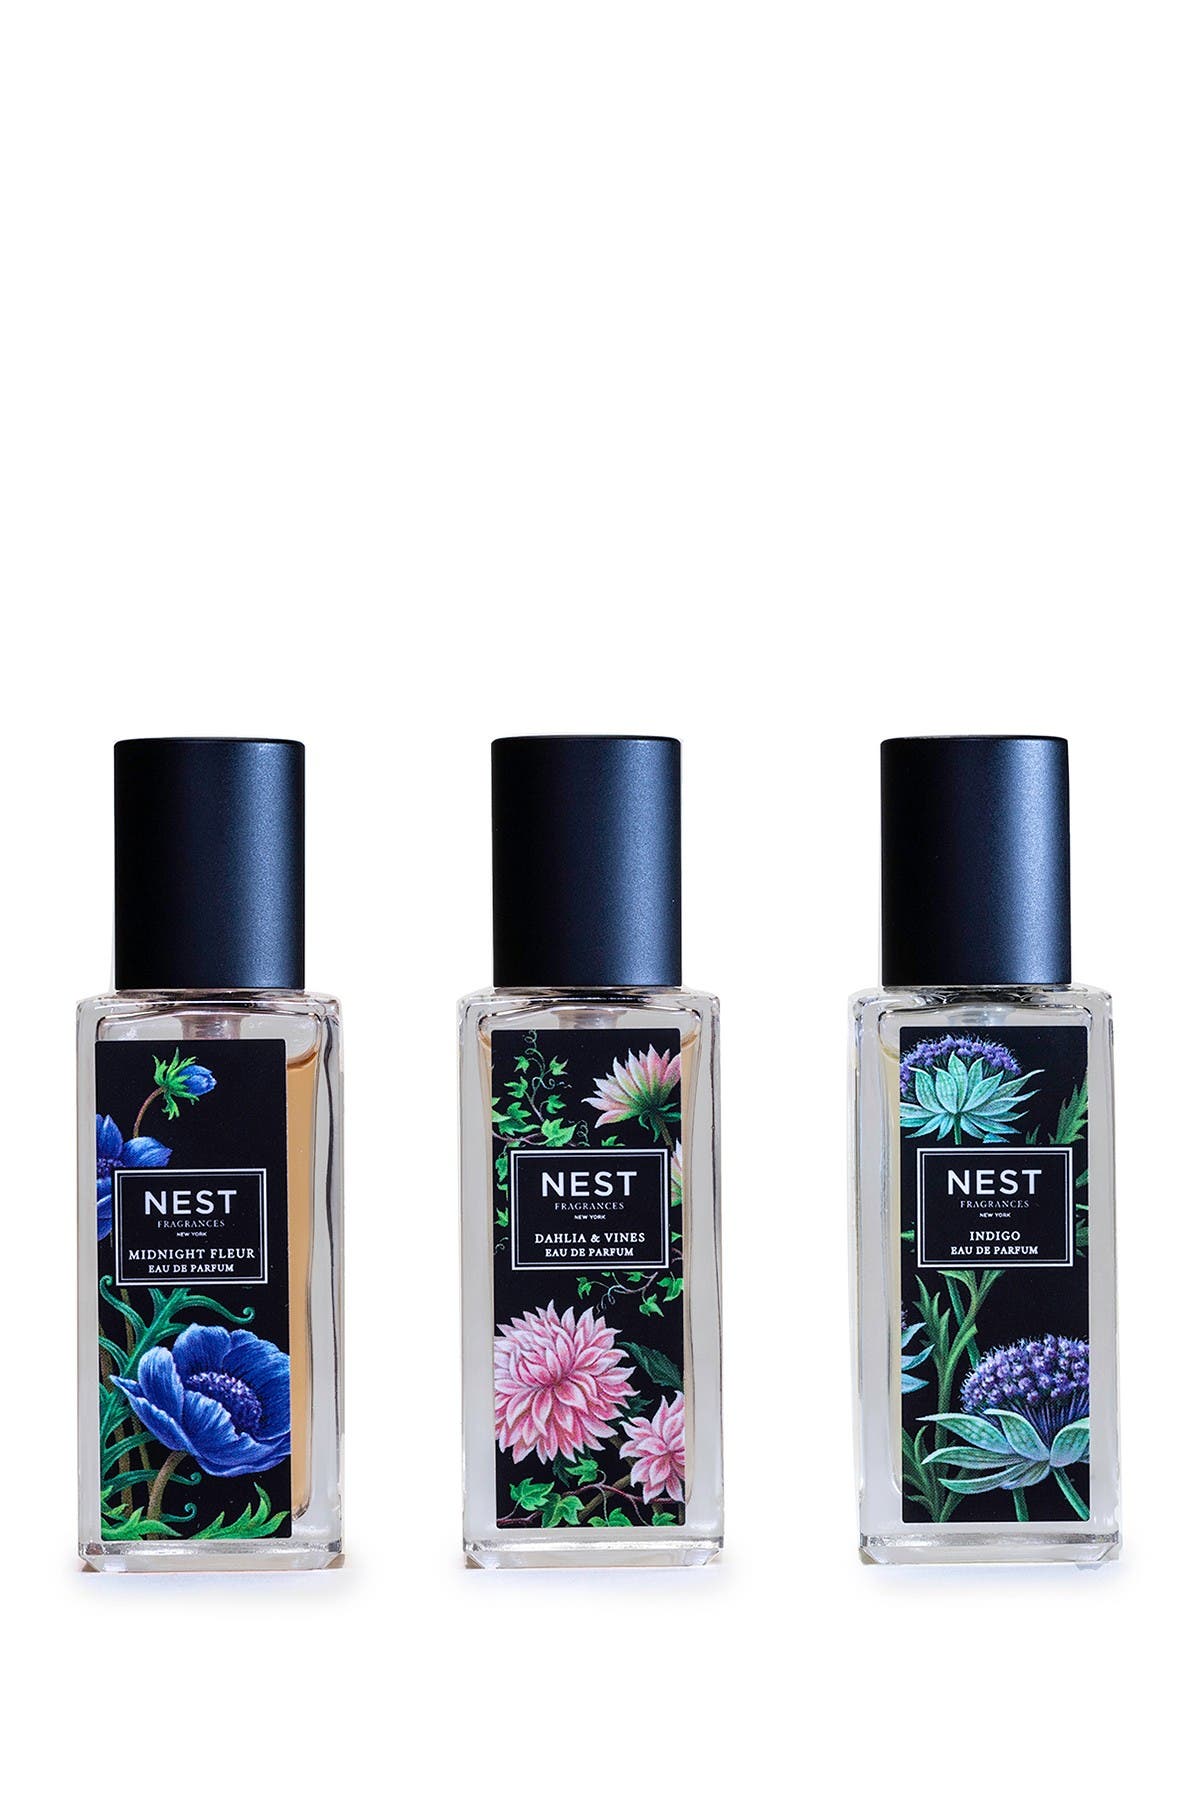 nest fragrances dahlia & vines